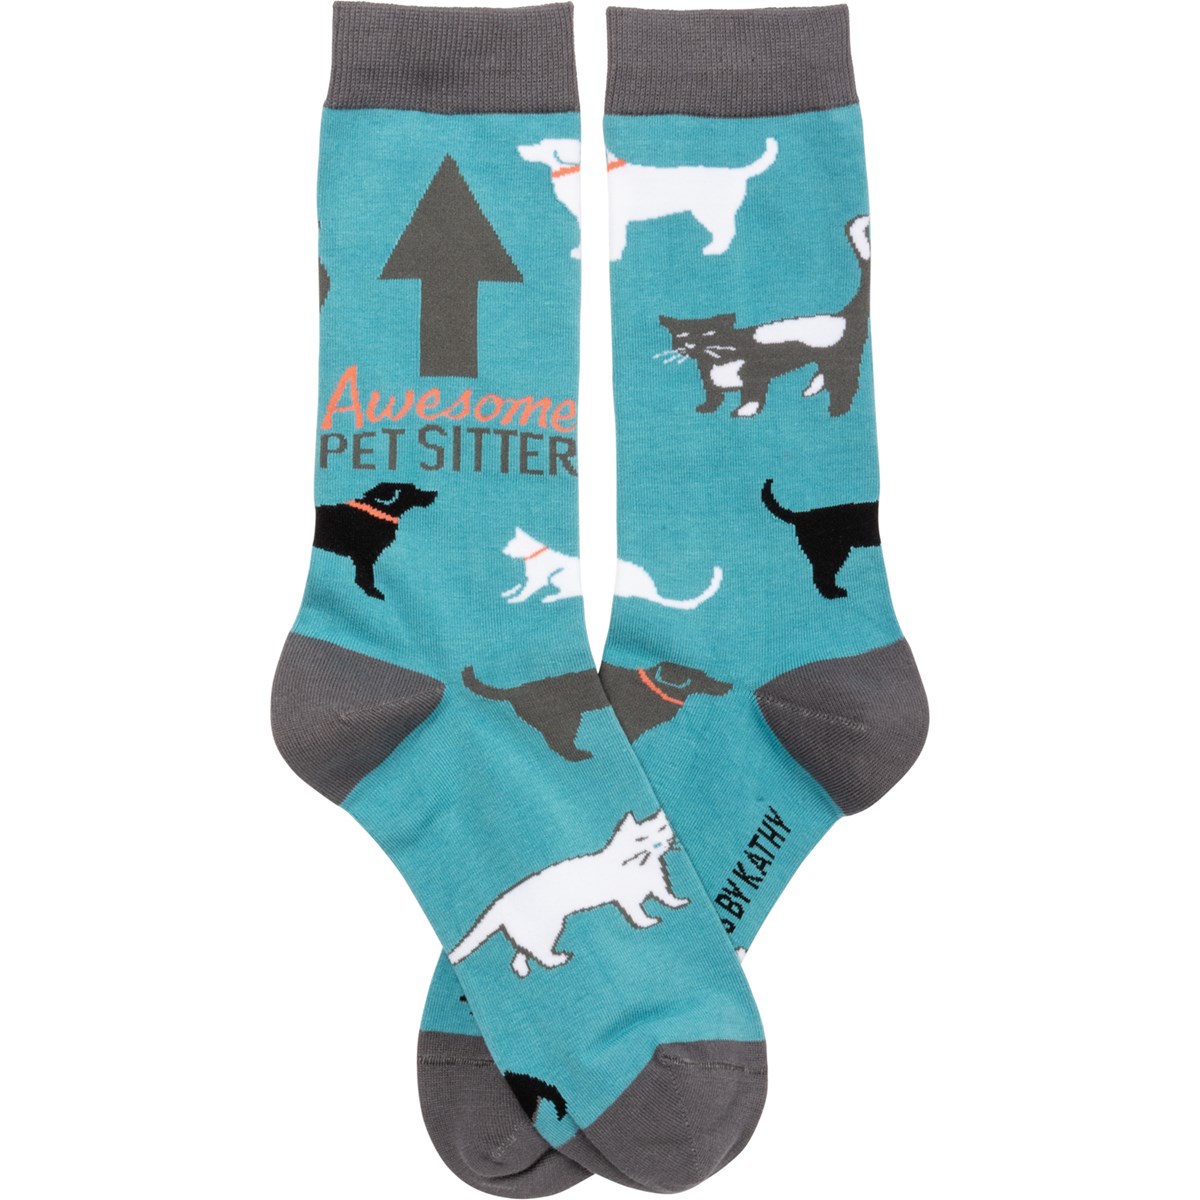 Awesome Pet Sitter Socks - Cotton, Nylon, Spandex